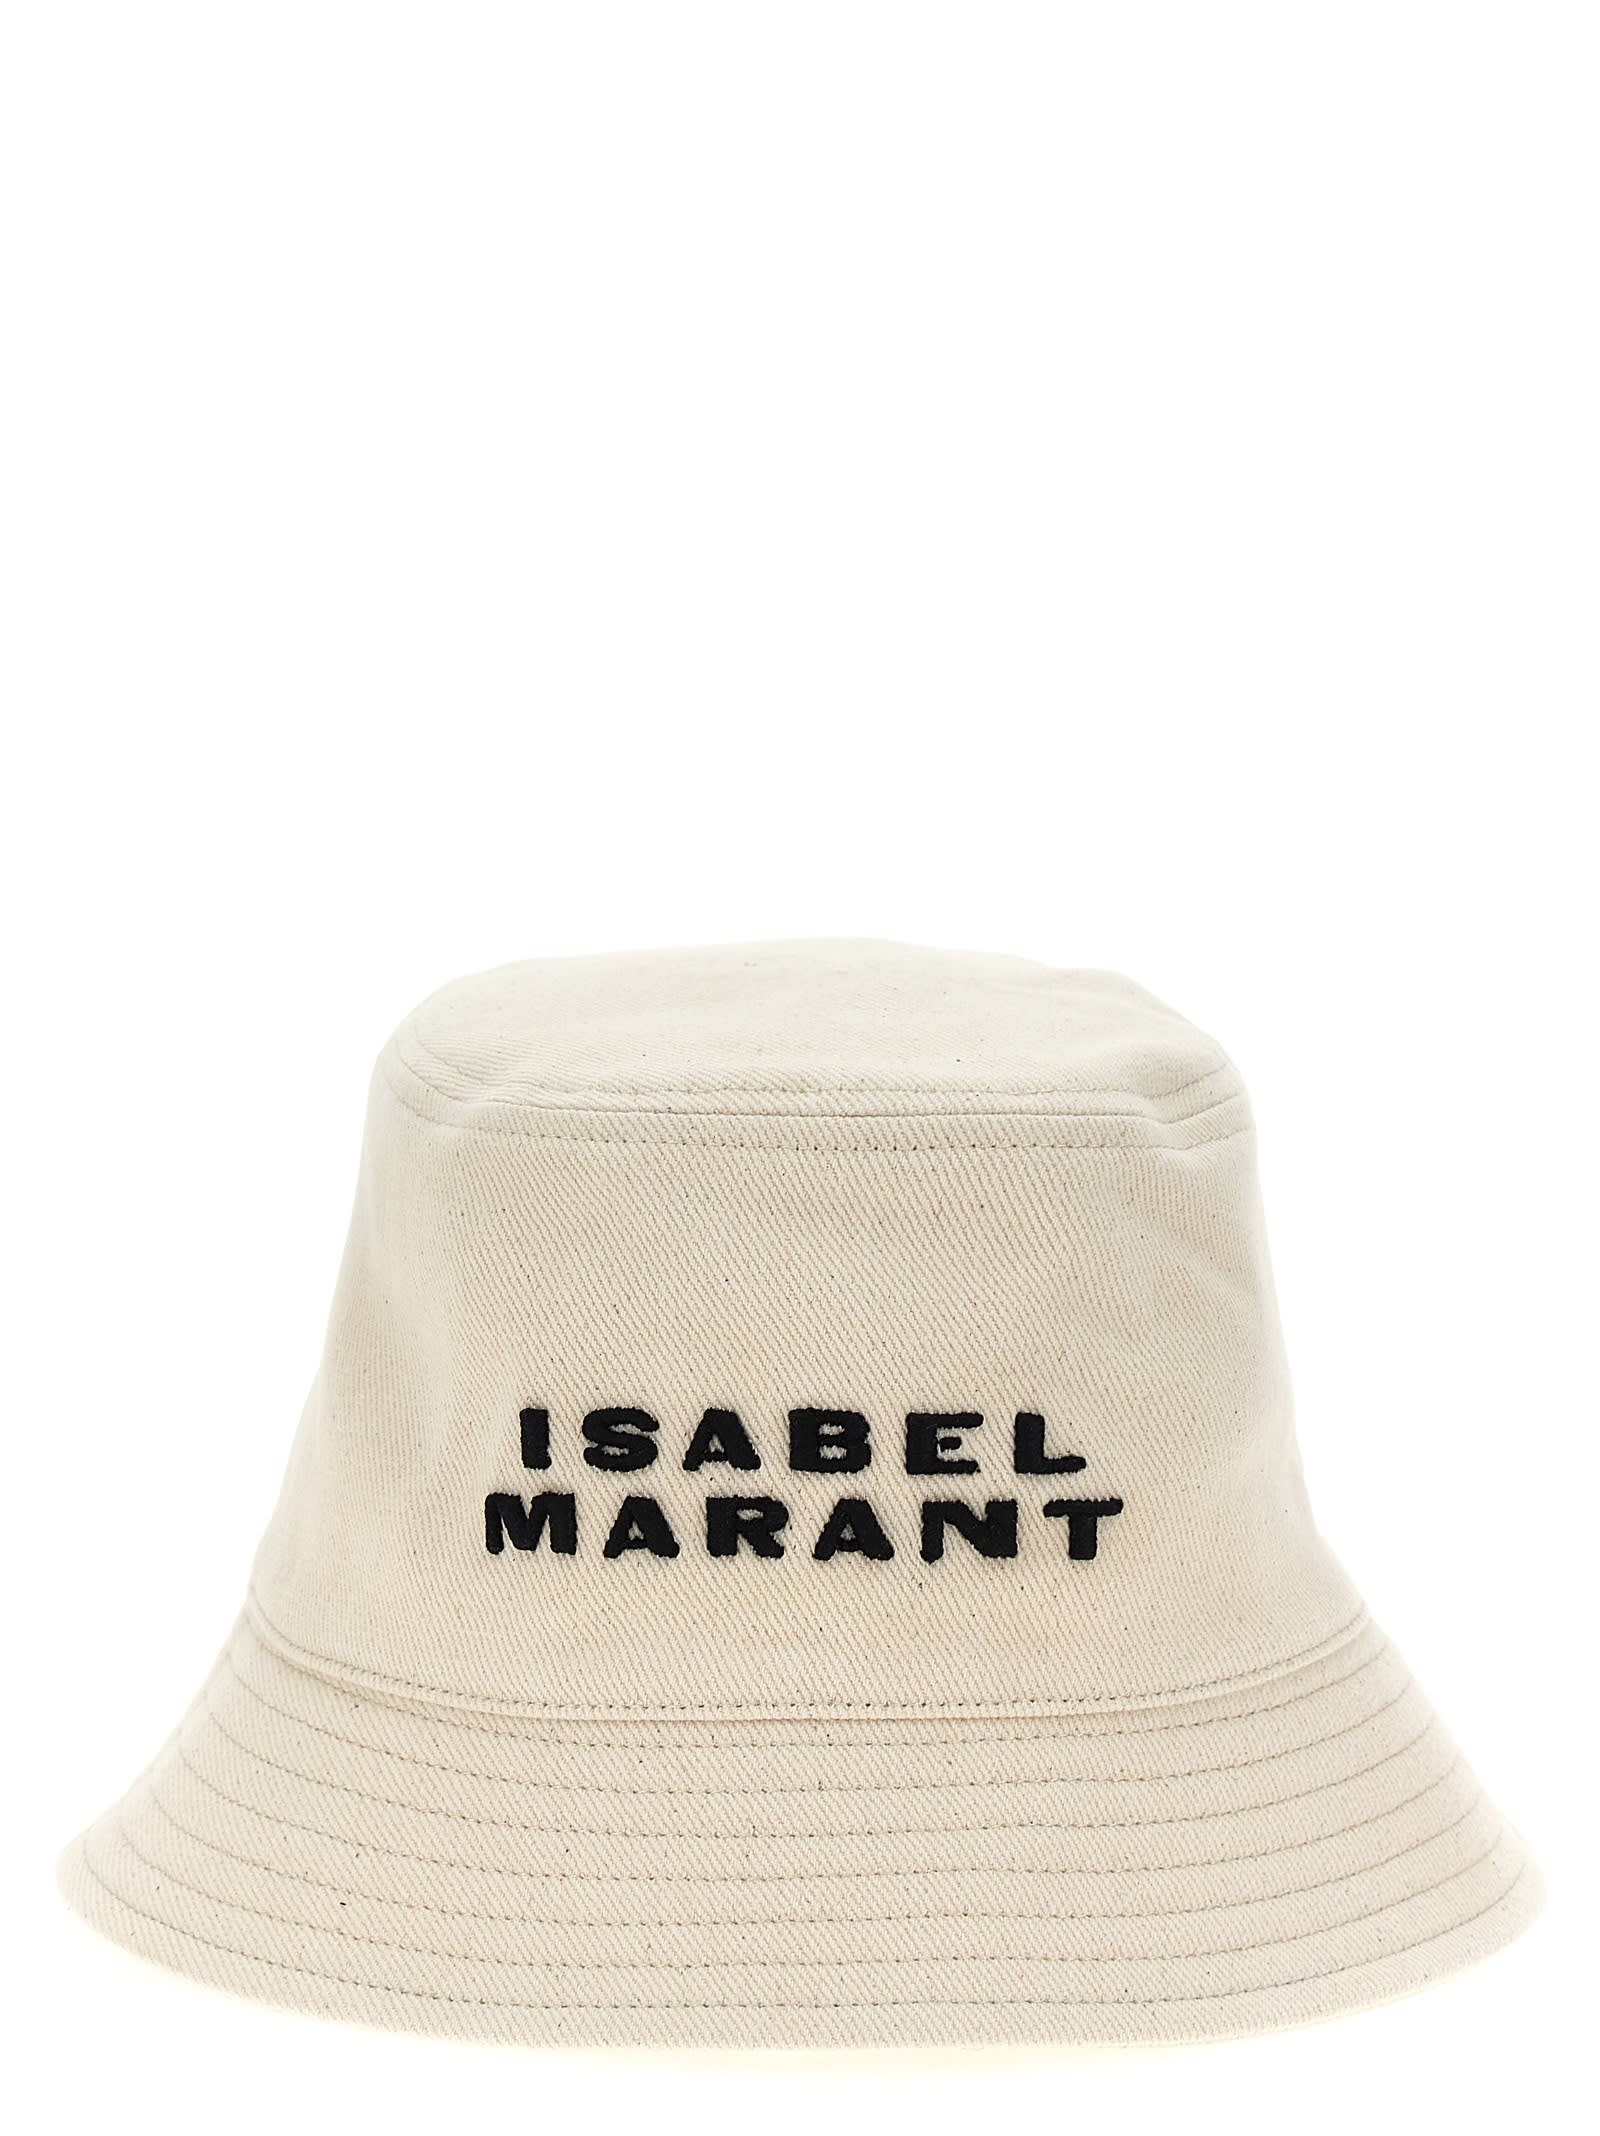 ISABEL MARANT HALEY BUCKET HAT